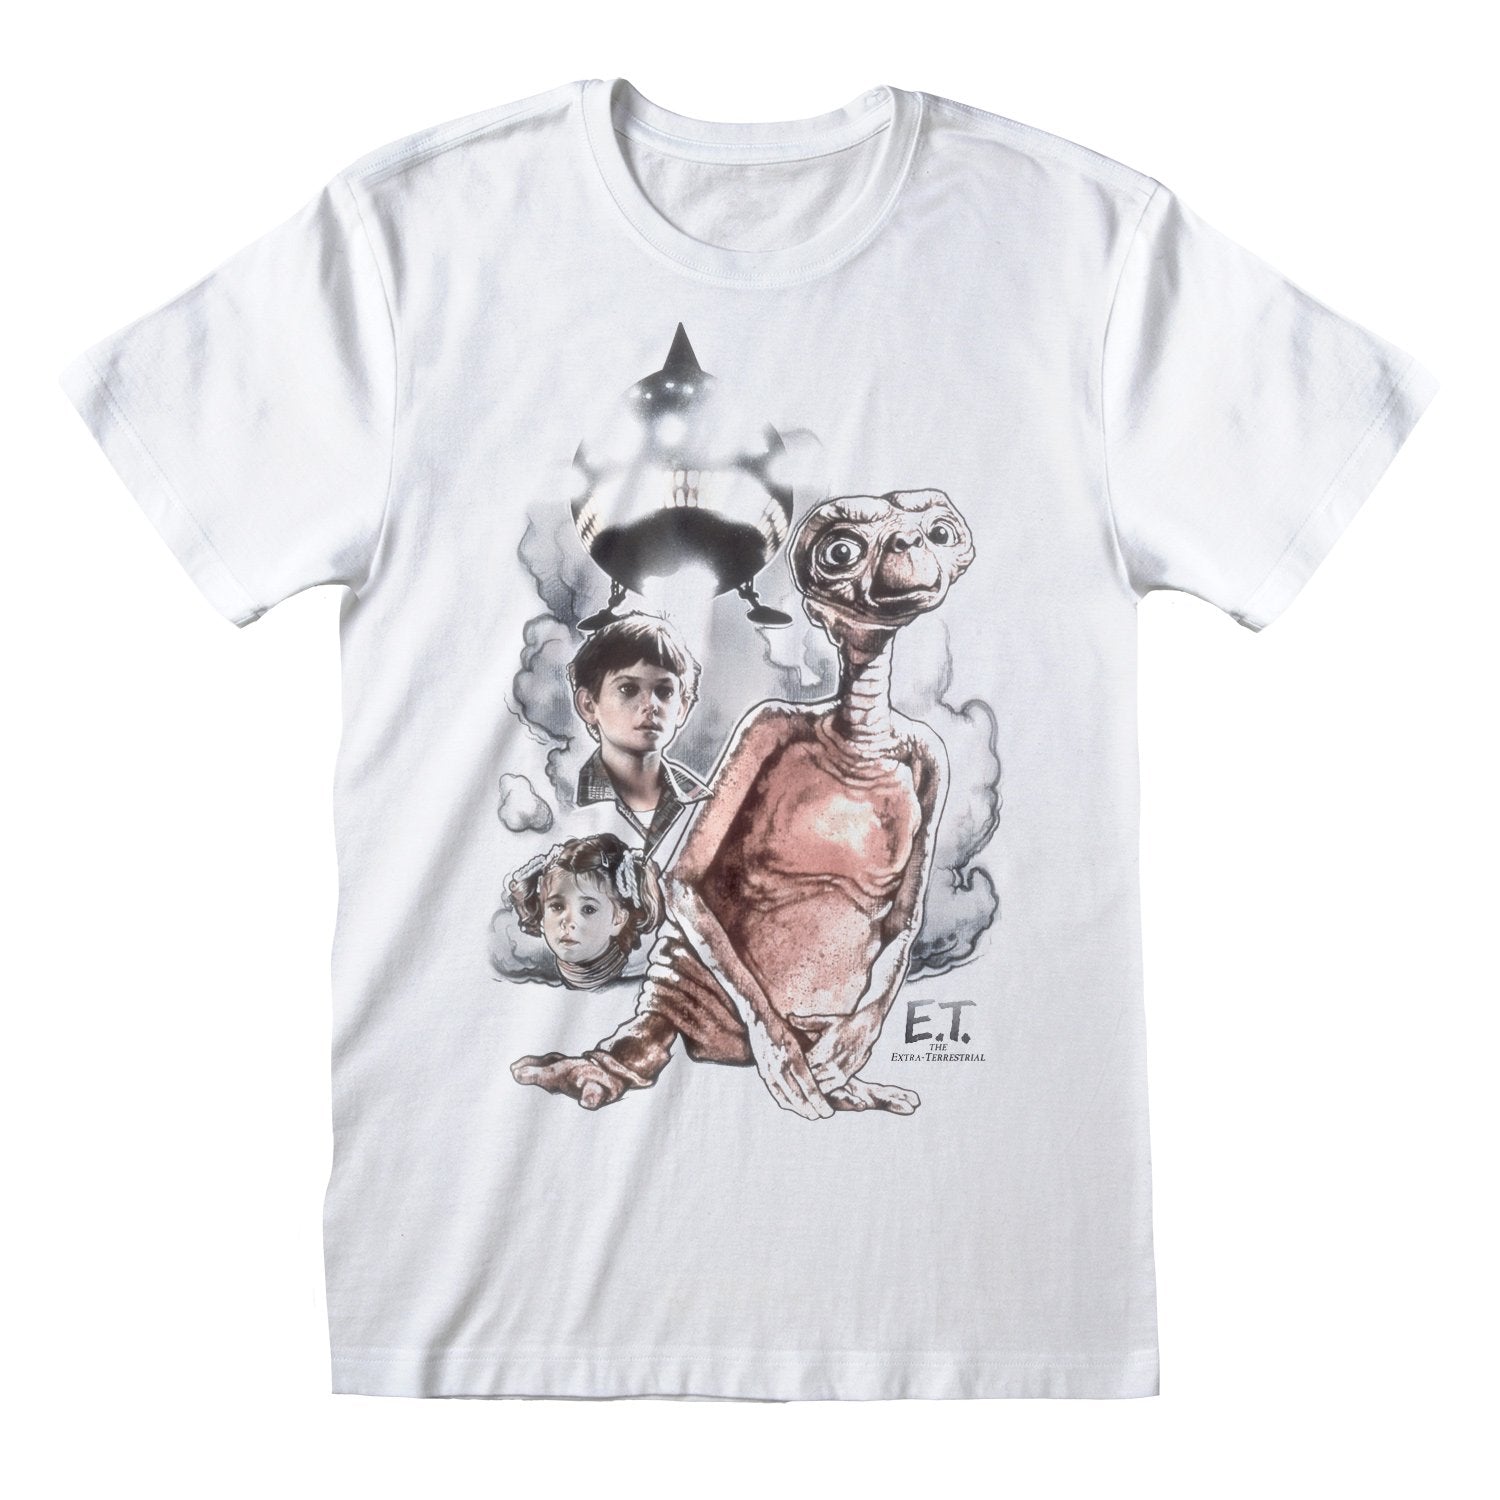 E.T Vintage Poster T-Shirt (Last Available)